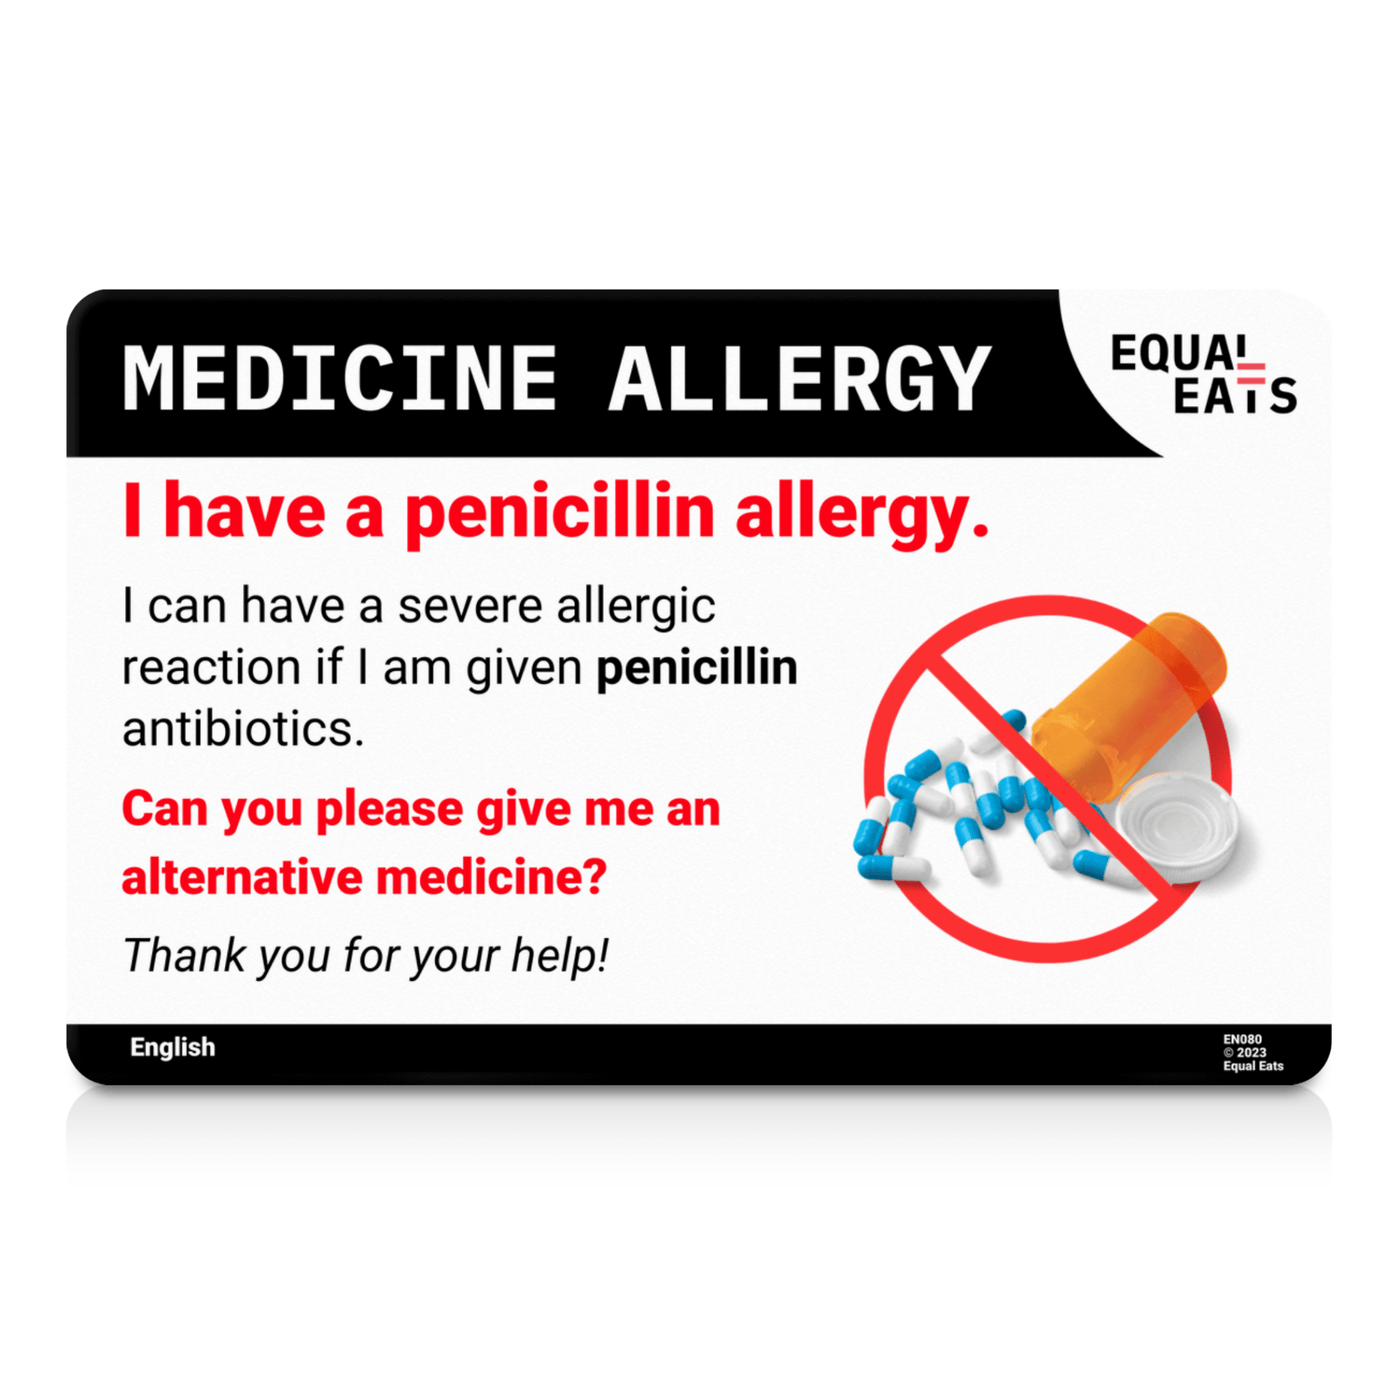 Indonesian Penicillin Allergy Card